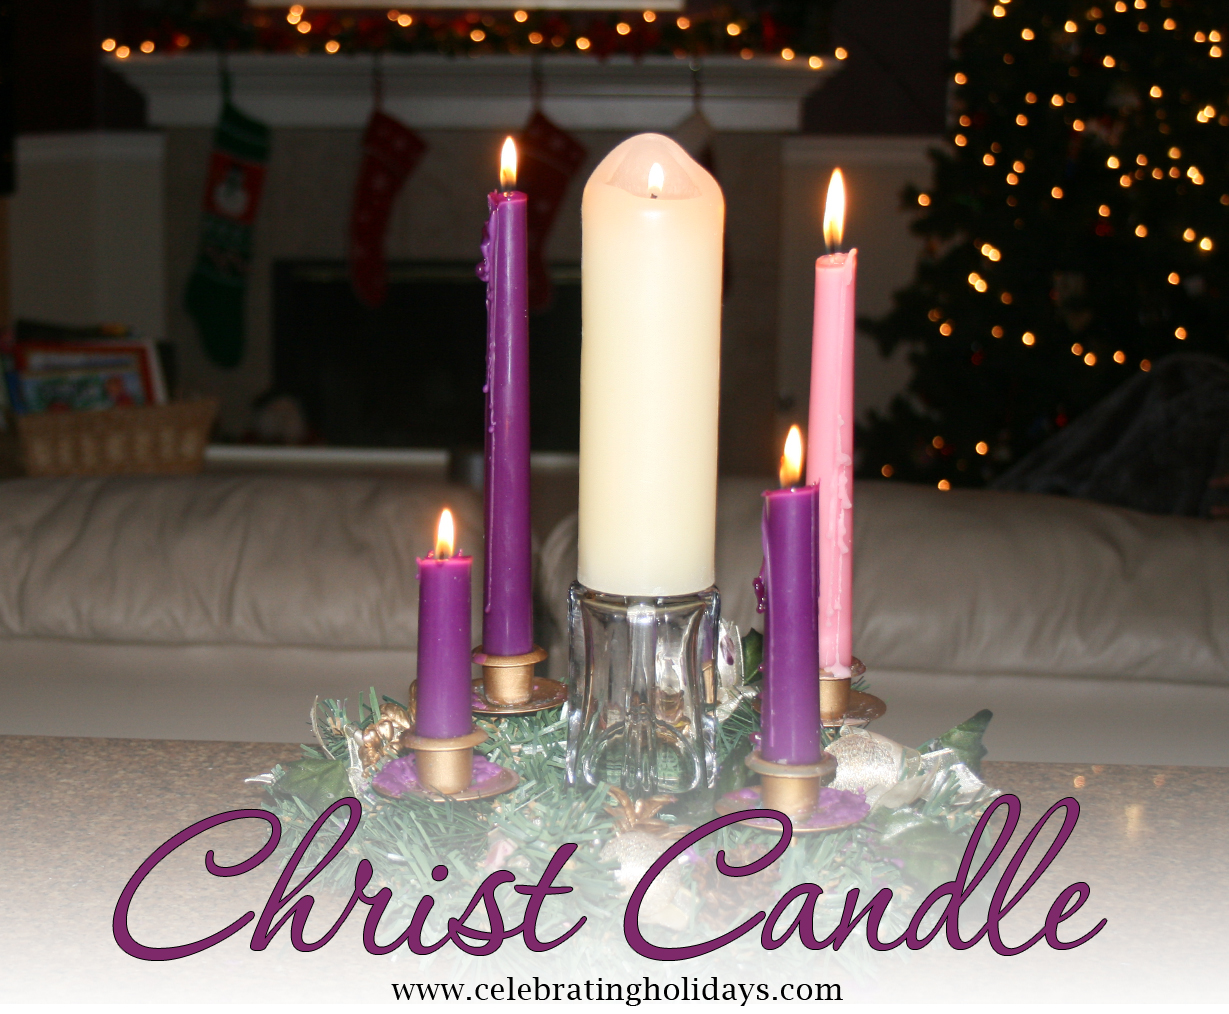 Christmas Reading, Music, and Candle Lighting